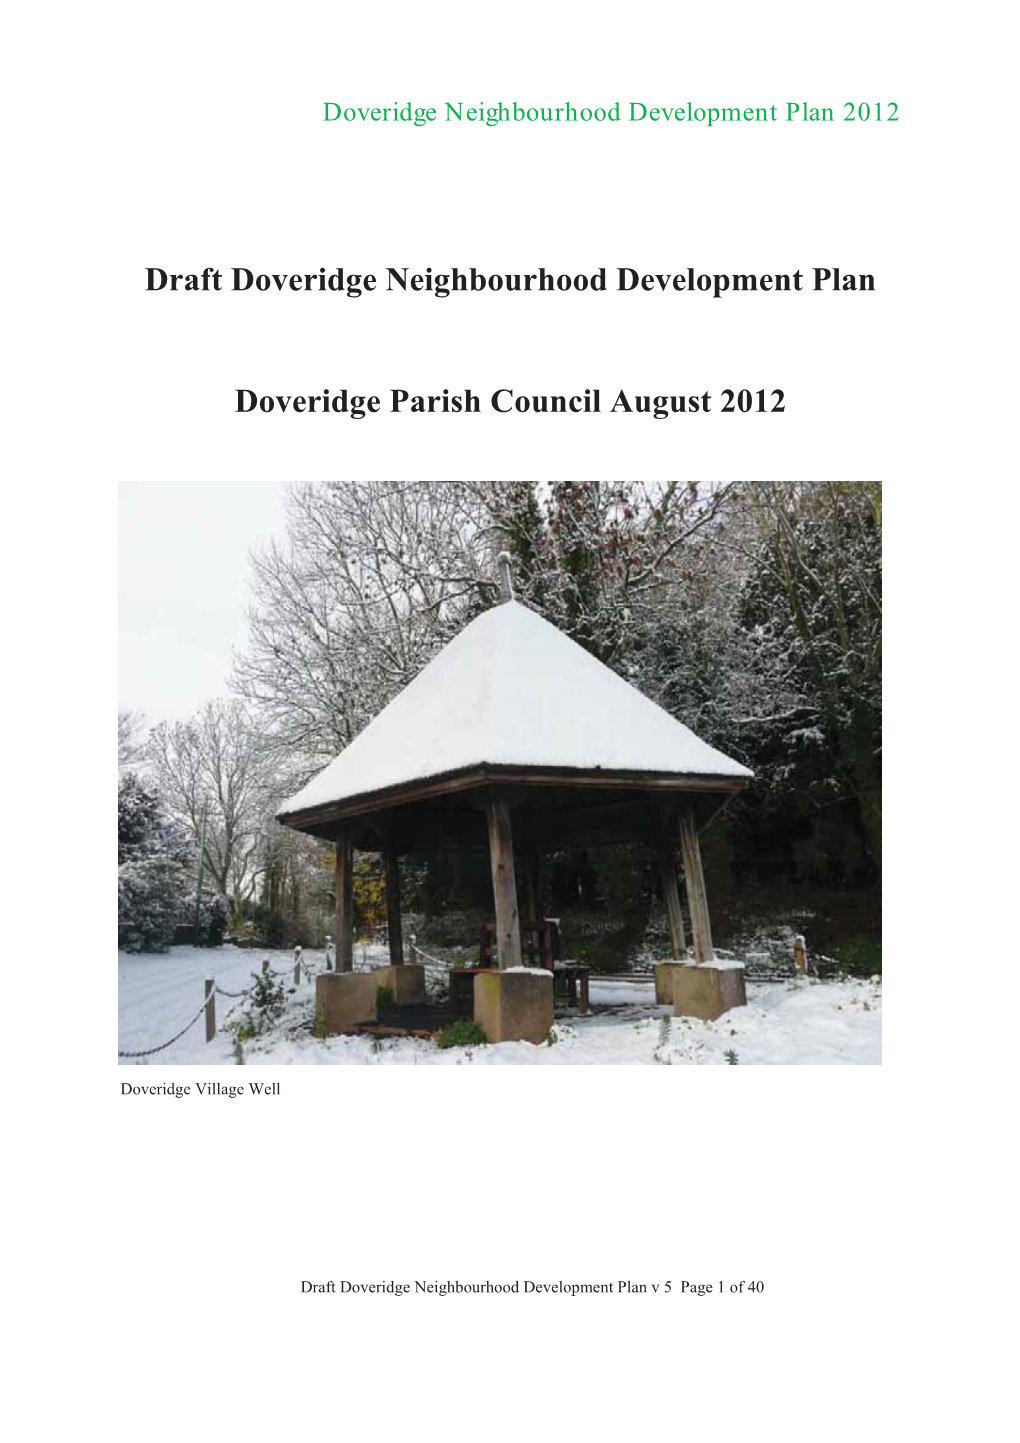 Draft Doveridge Neighbourhood Development Plan Doveridge